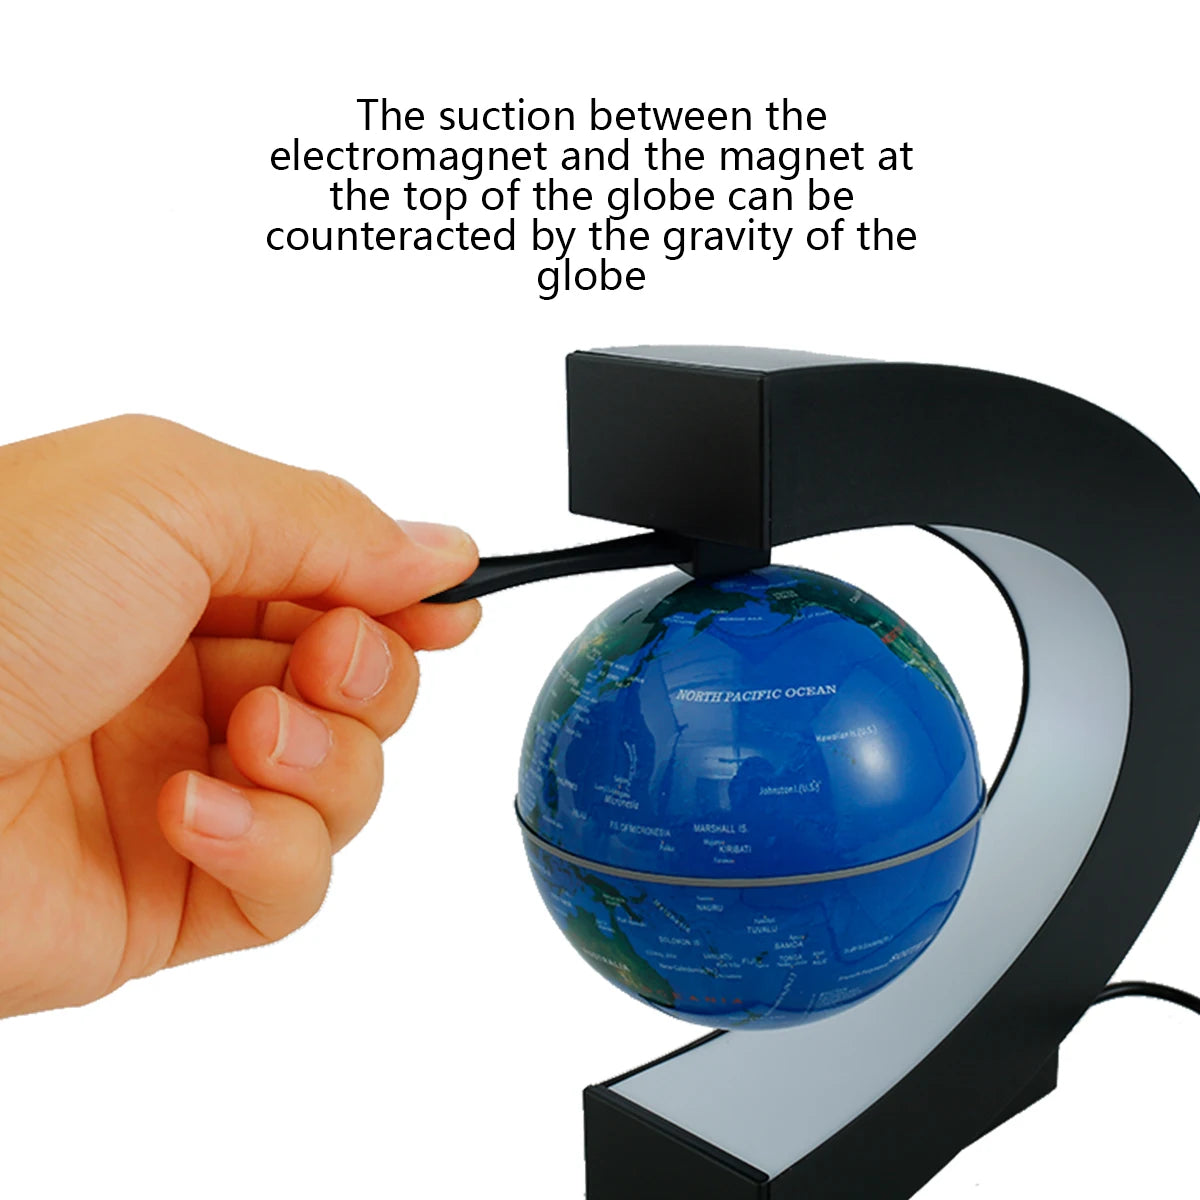 Magnetic Levitation Globe LED Earth Floating Lamp Rotating Globe Bedside Lights Novelty Christmas Gift